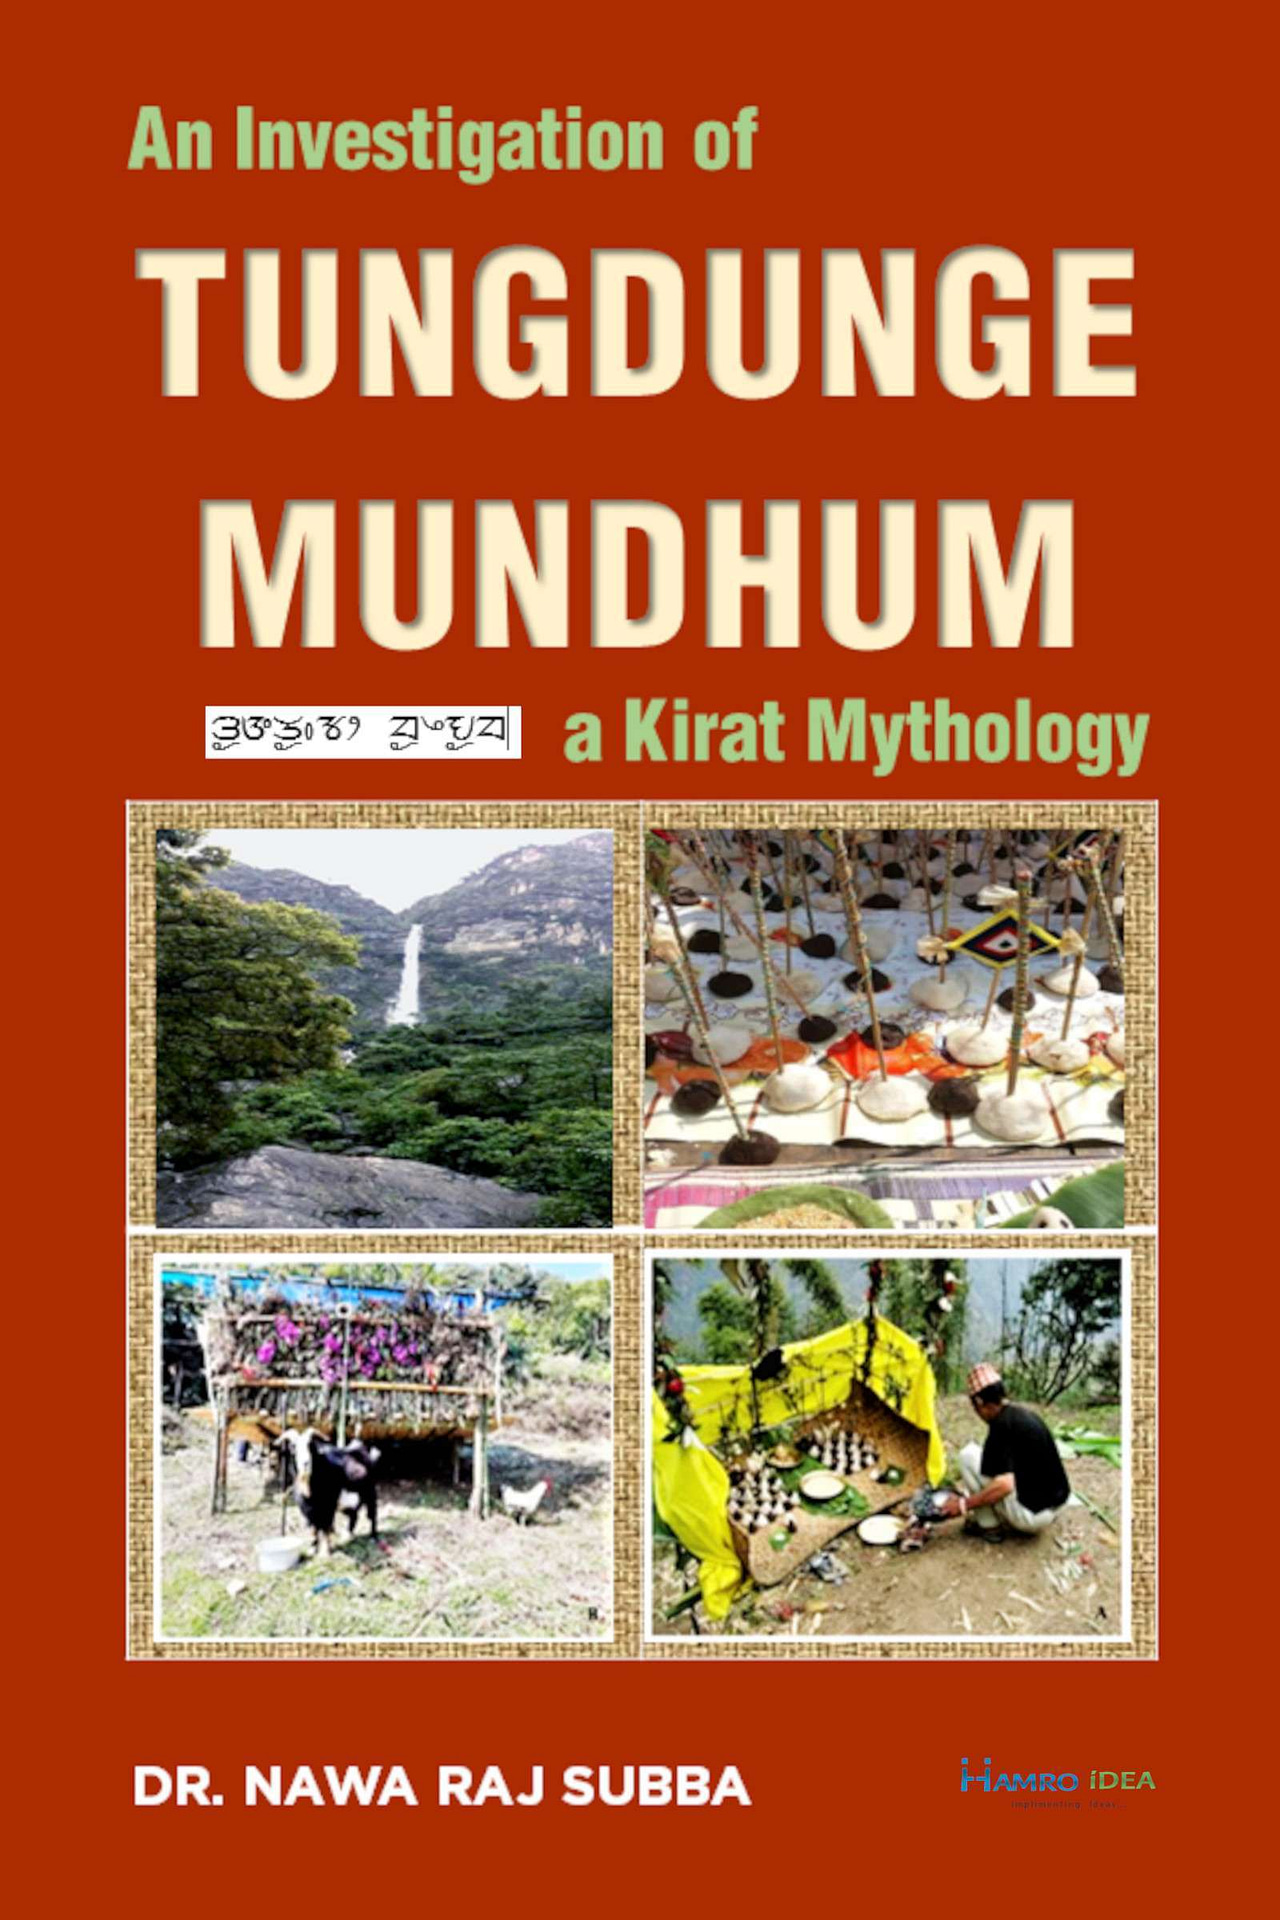 Investigation of Tungdunge Mundhum